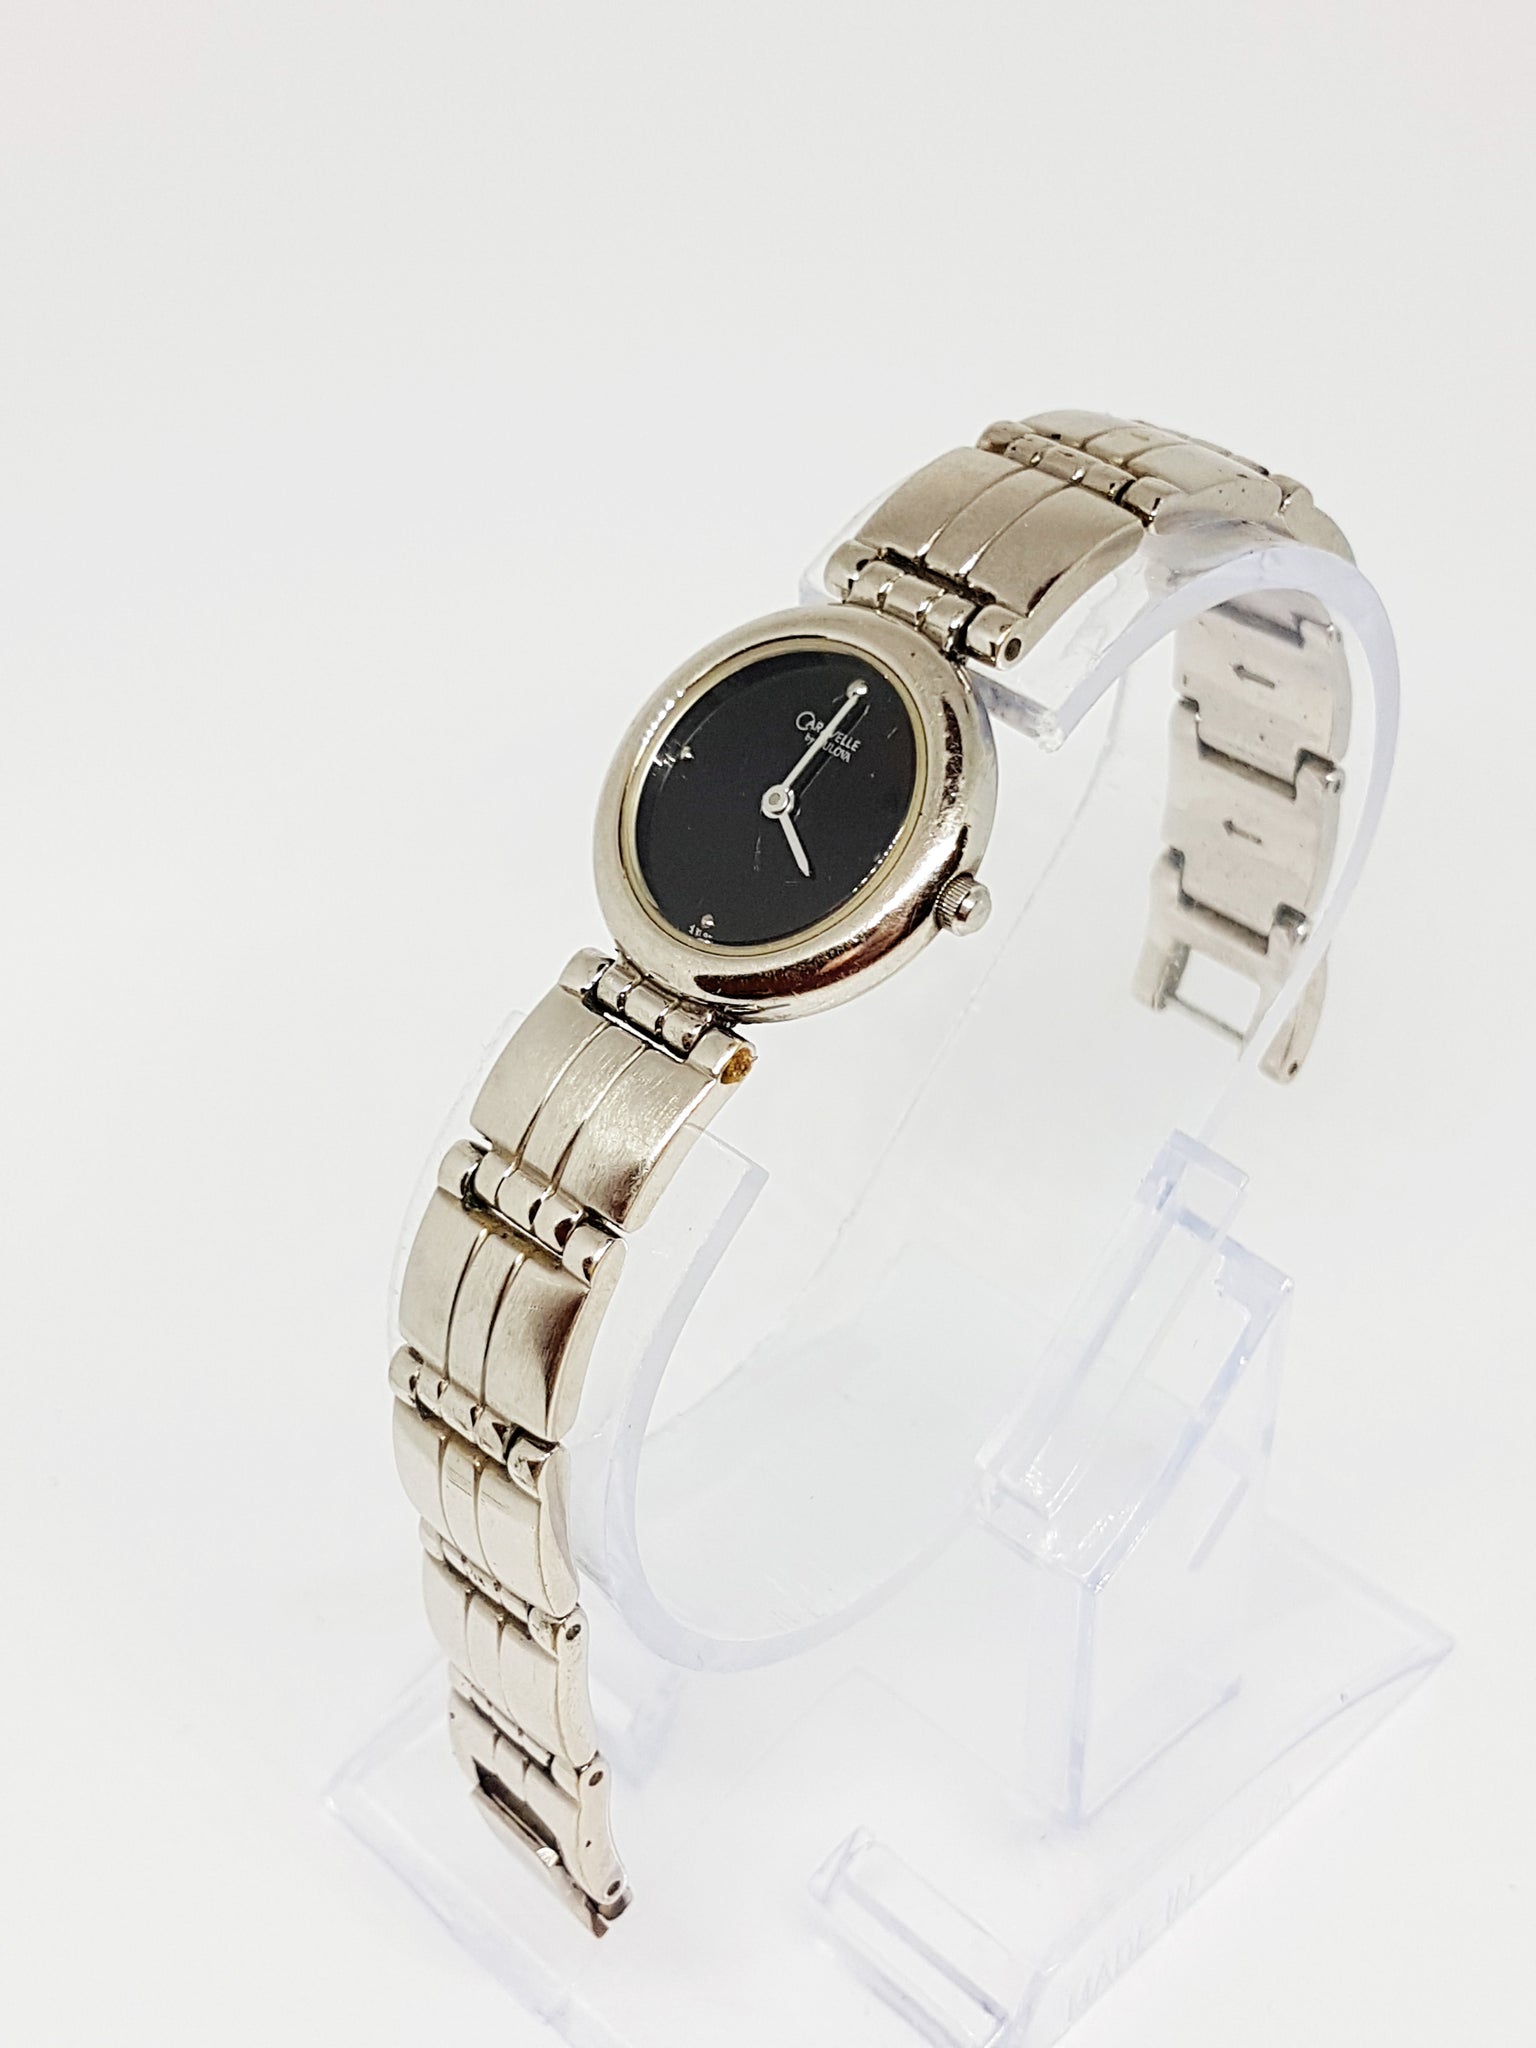 Vintage Silver-tone Bulova Women's Watch | Caravelle Analog Quartz ...